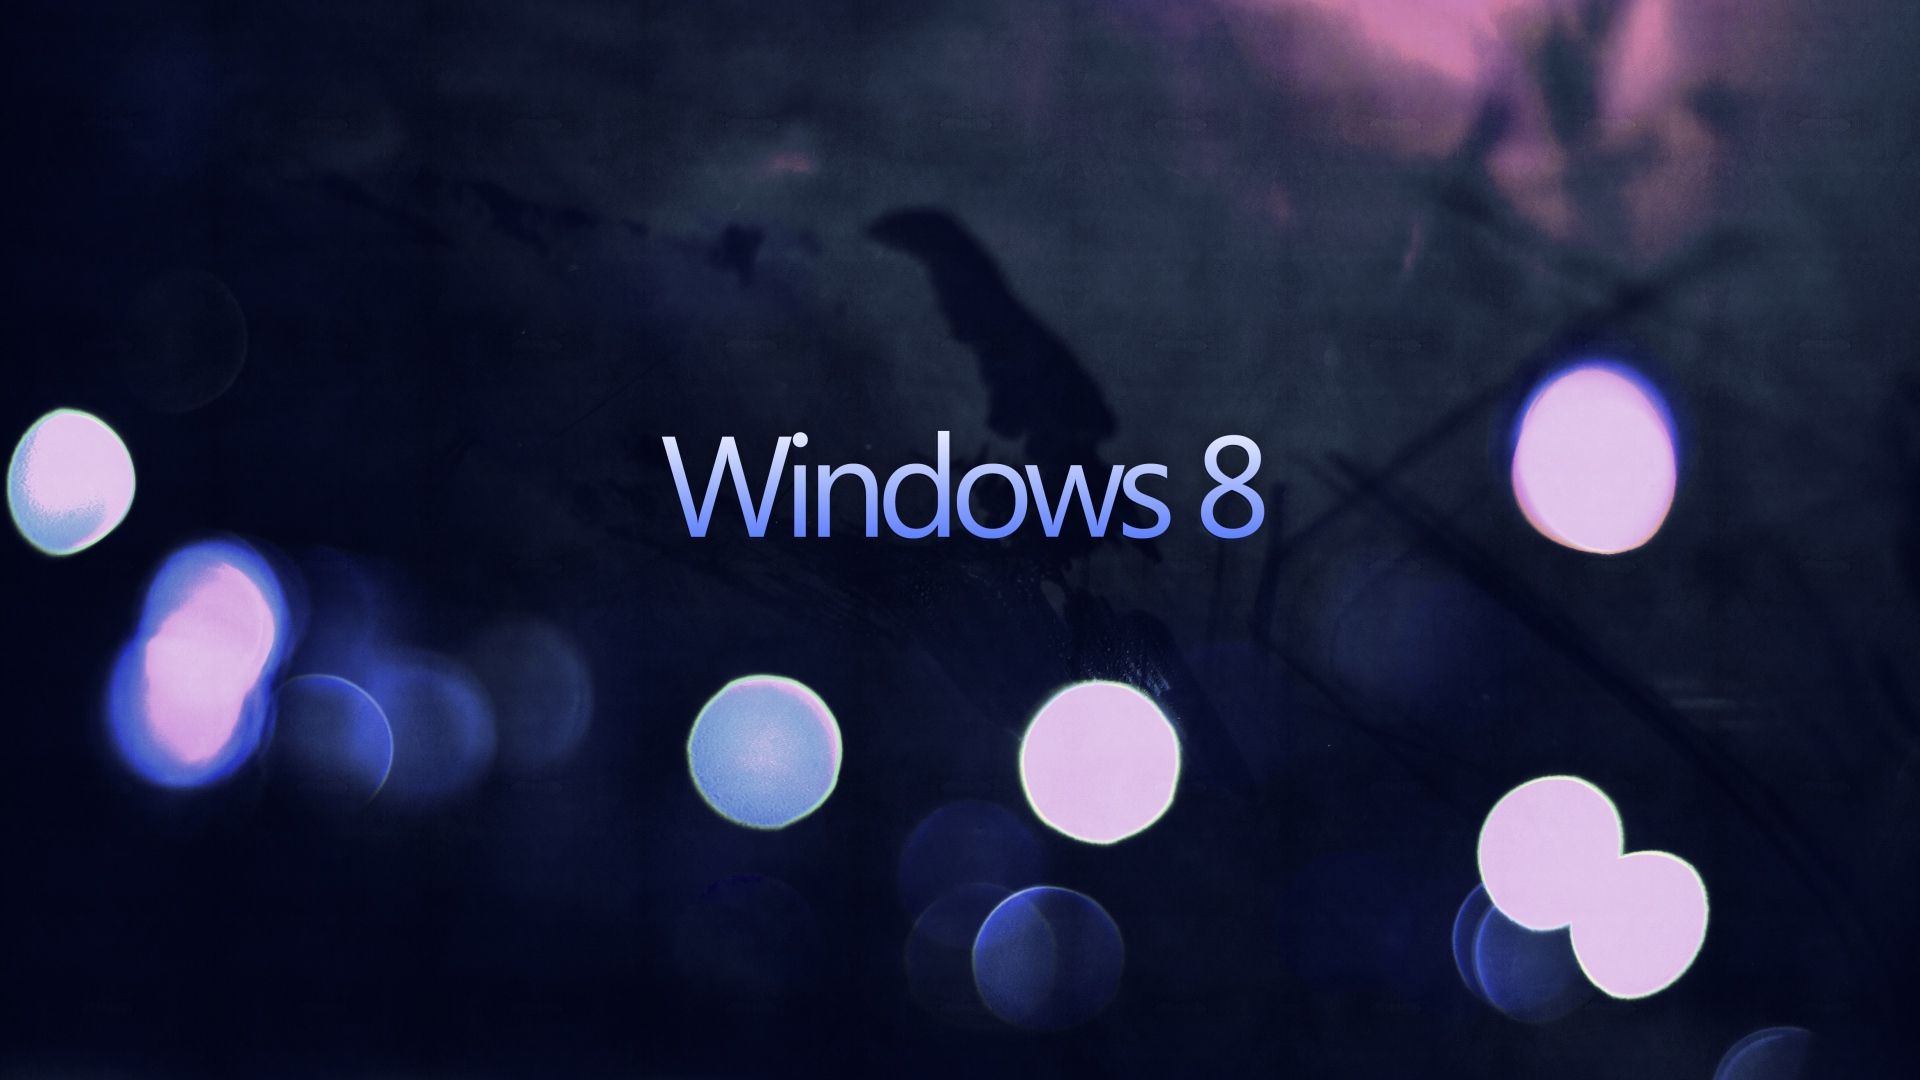 Download Wallpaper 1920x1080 Windows 8, White, Blue, Pink Full HD ...